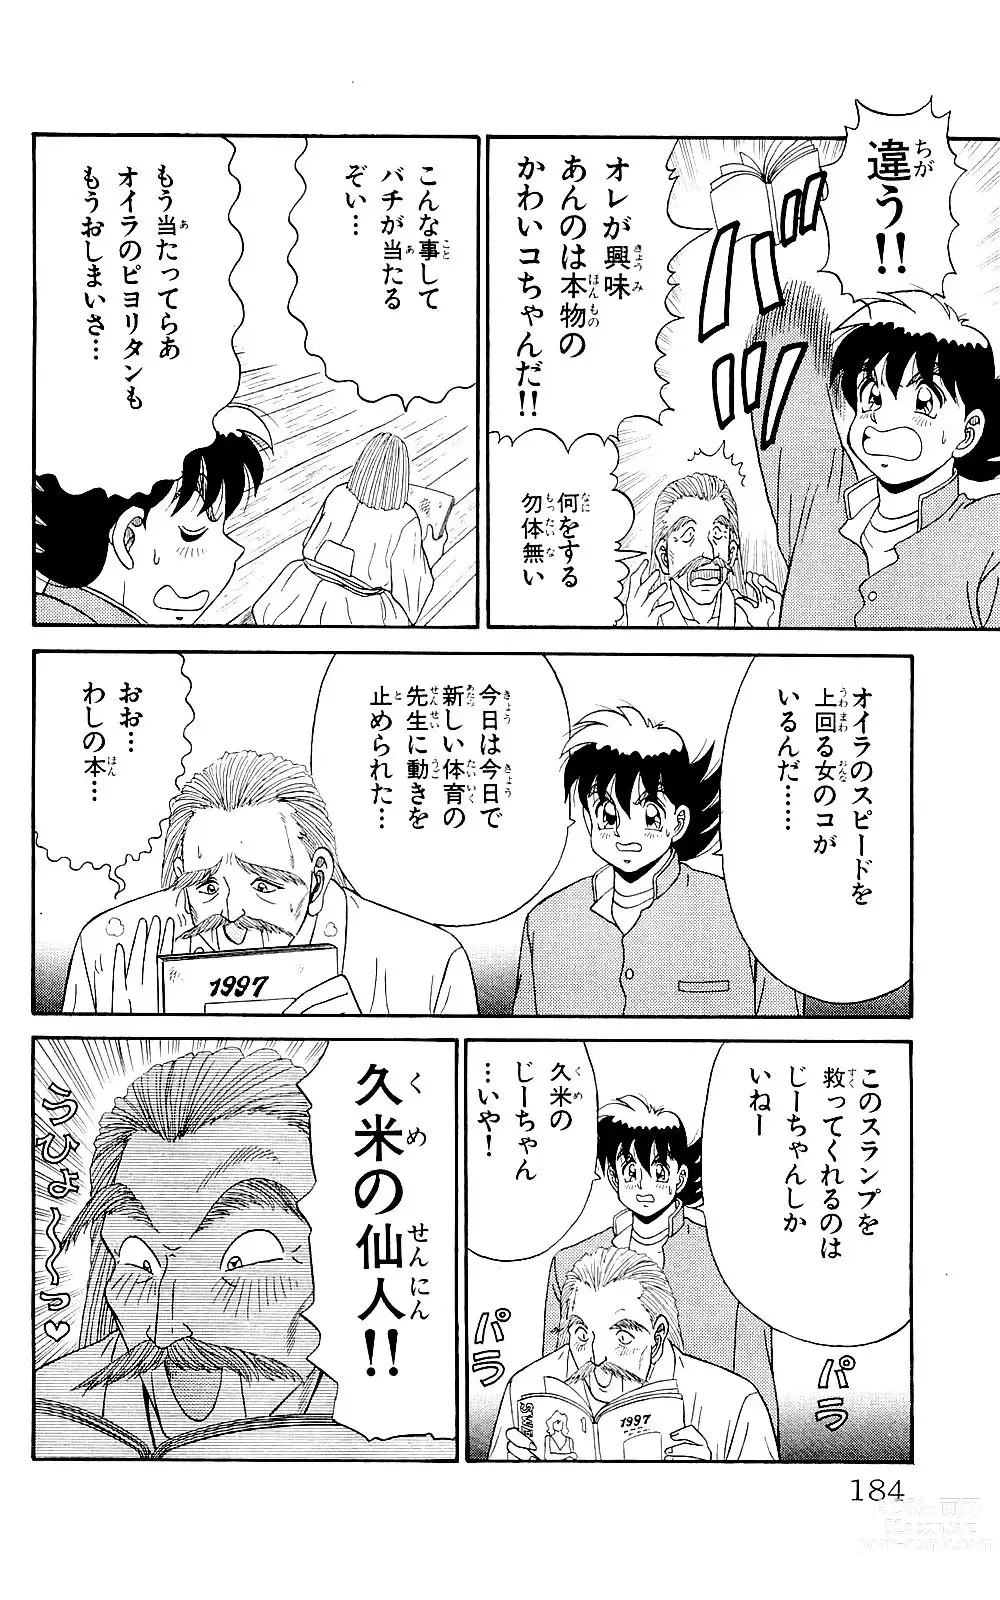 Page 182 of manga Orette Piyoritan 06